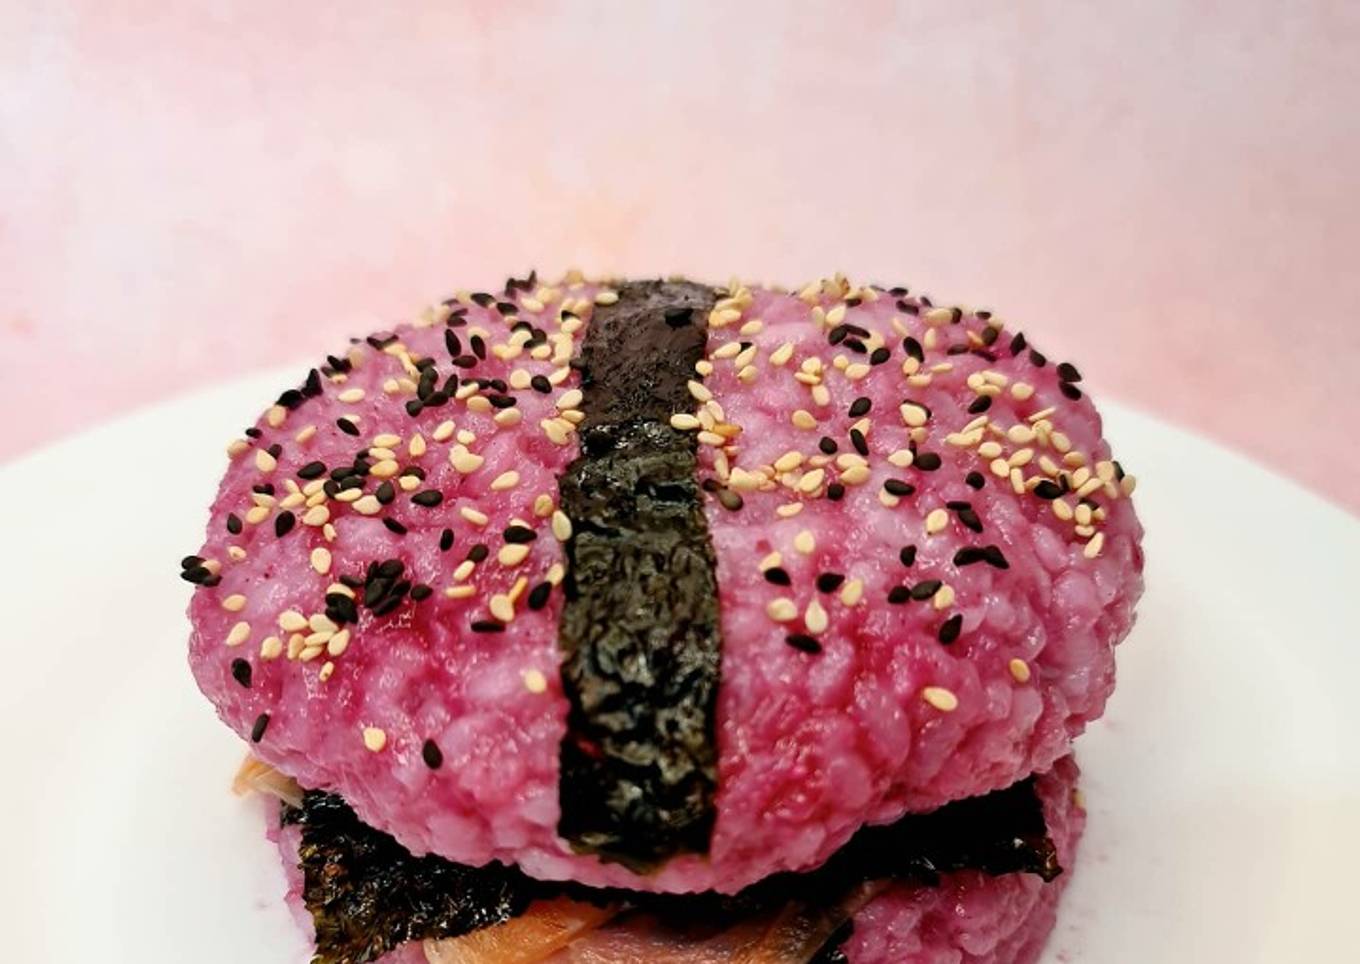 Pink Sushi Burger ðŸ£ðŸ”